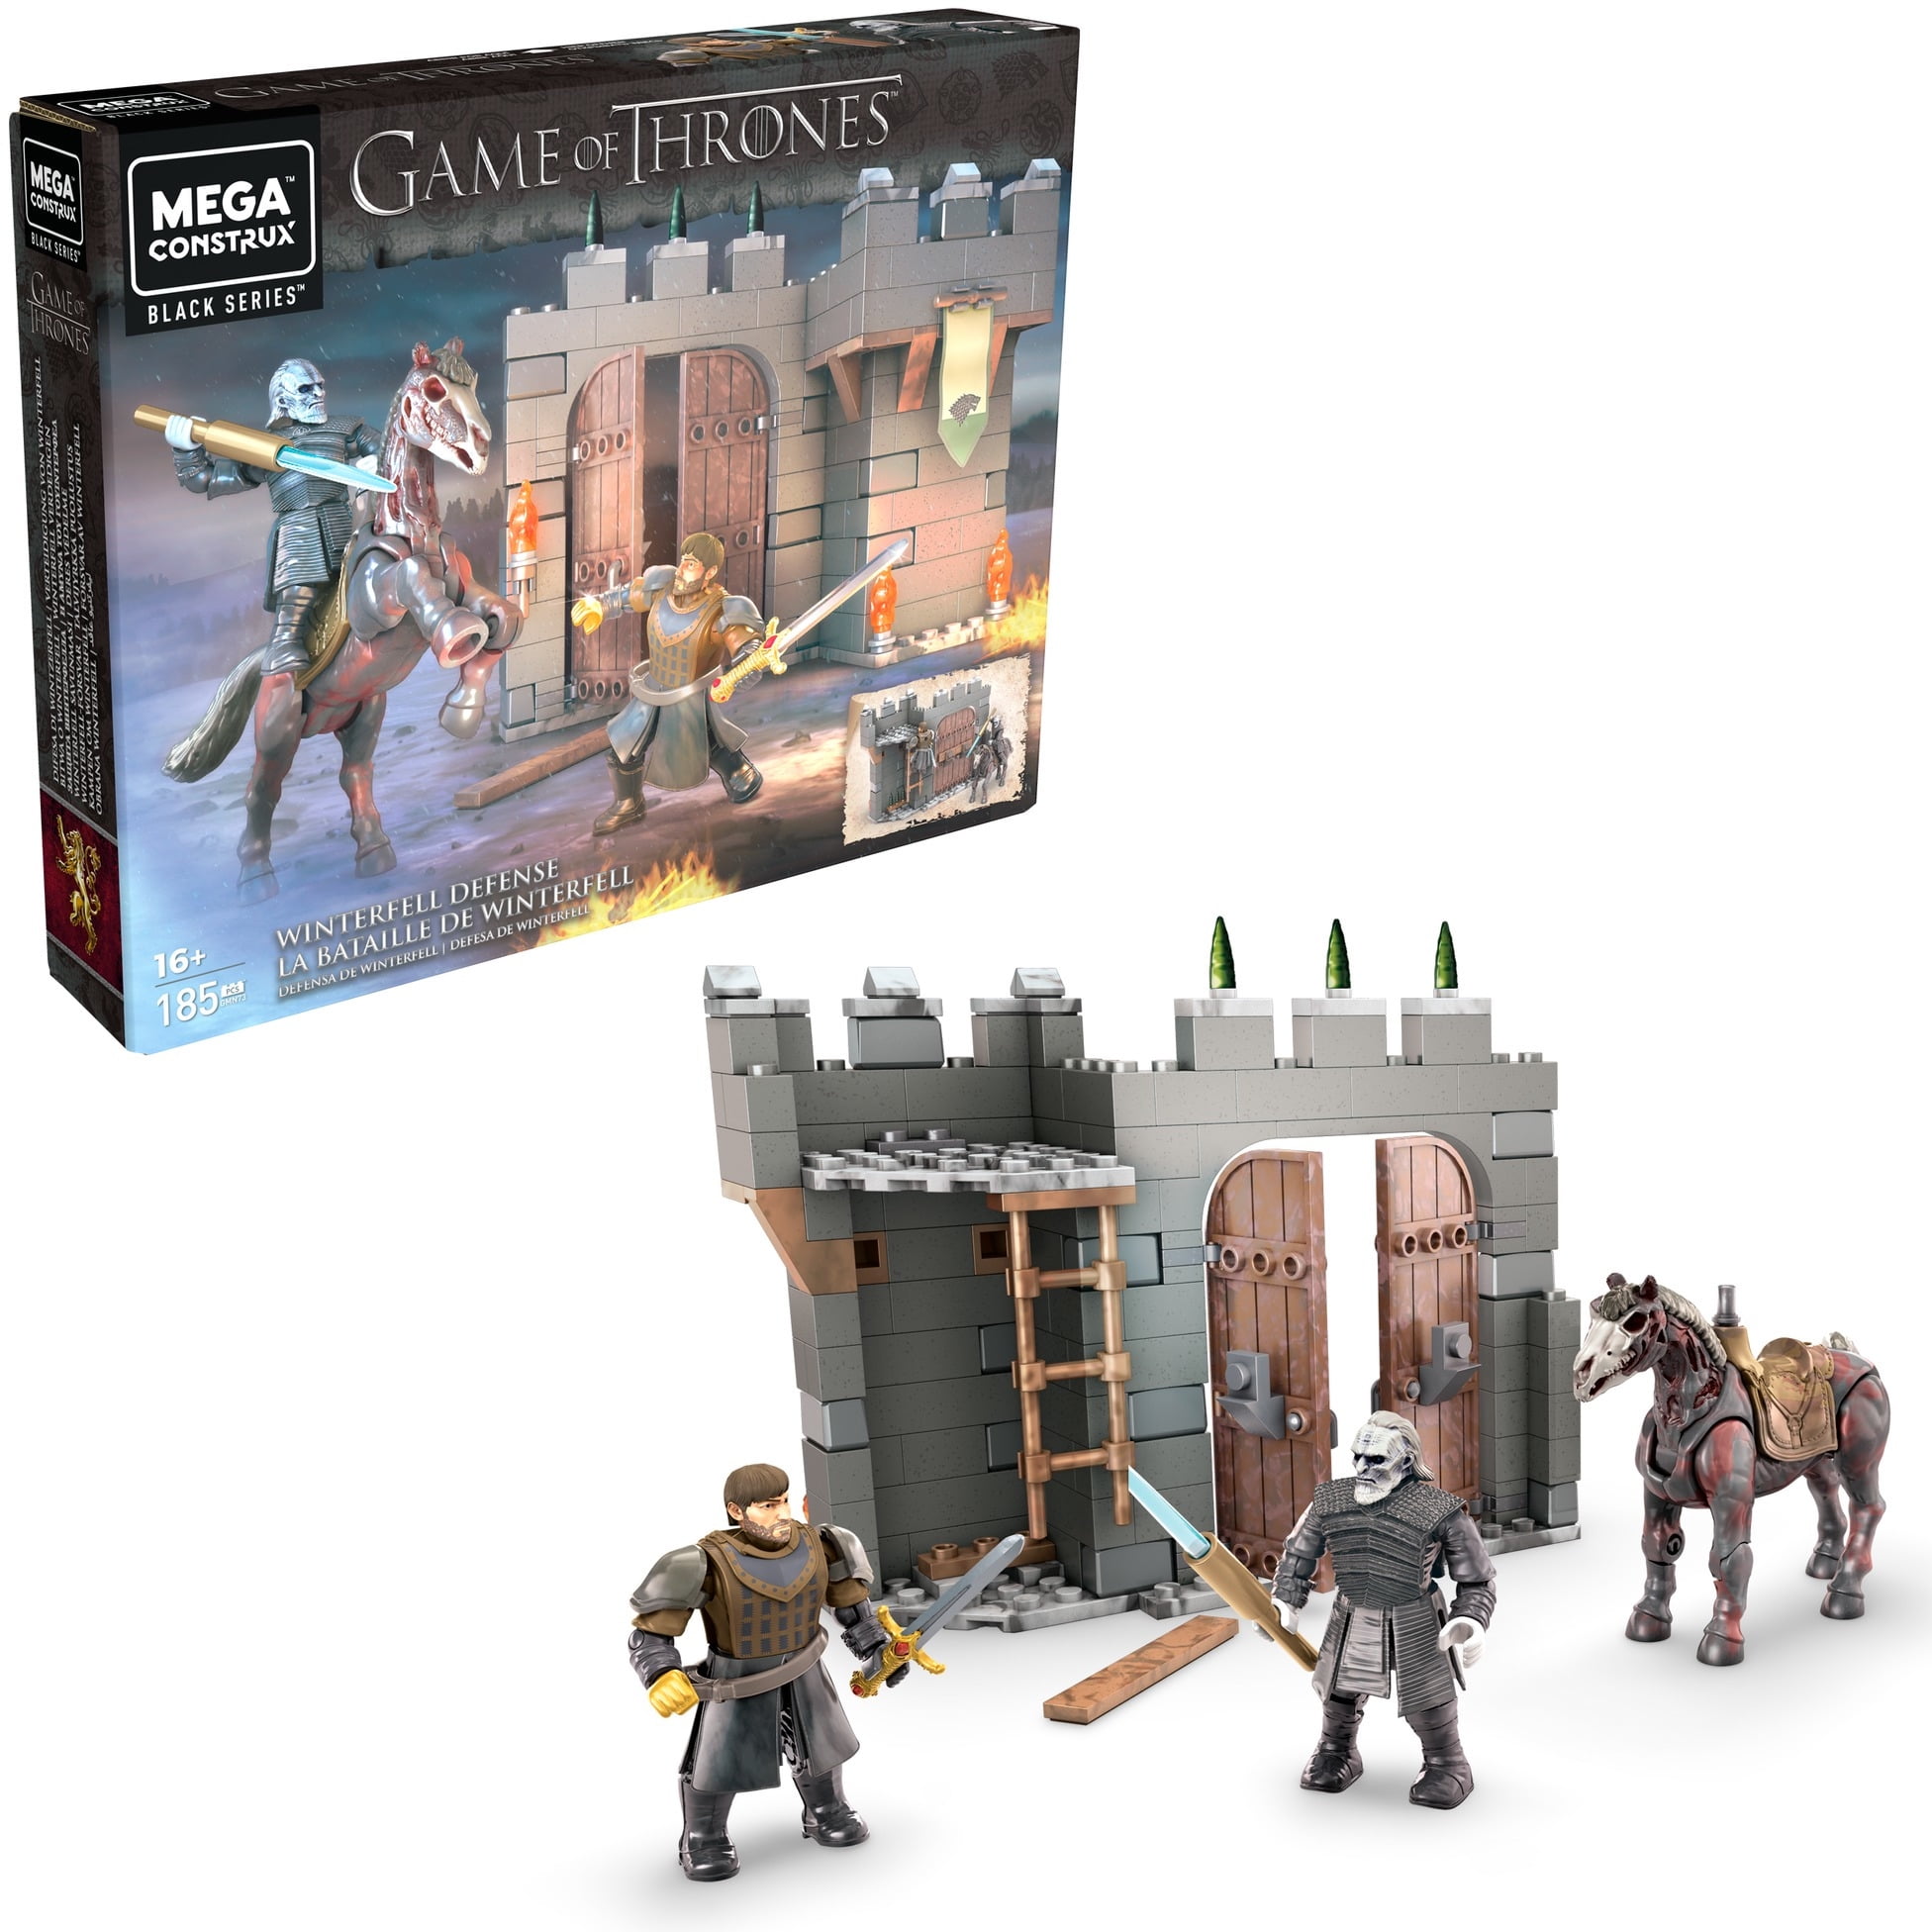 MEGA Construx GAME OF THRONES Daenerys e Drogon bambini giocattolo costruibile Alleanza 